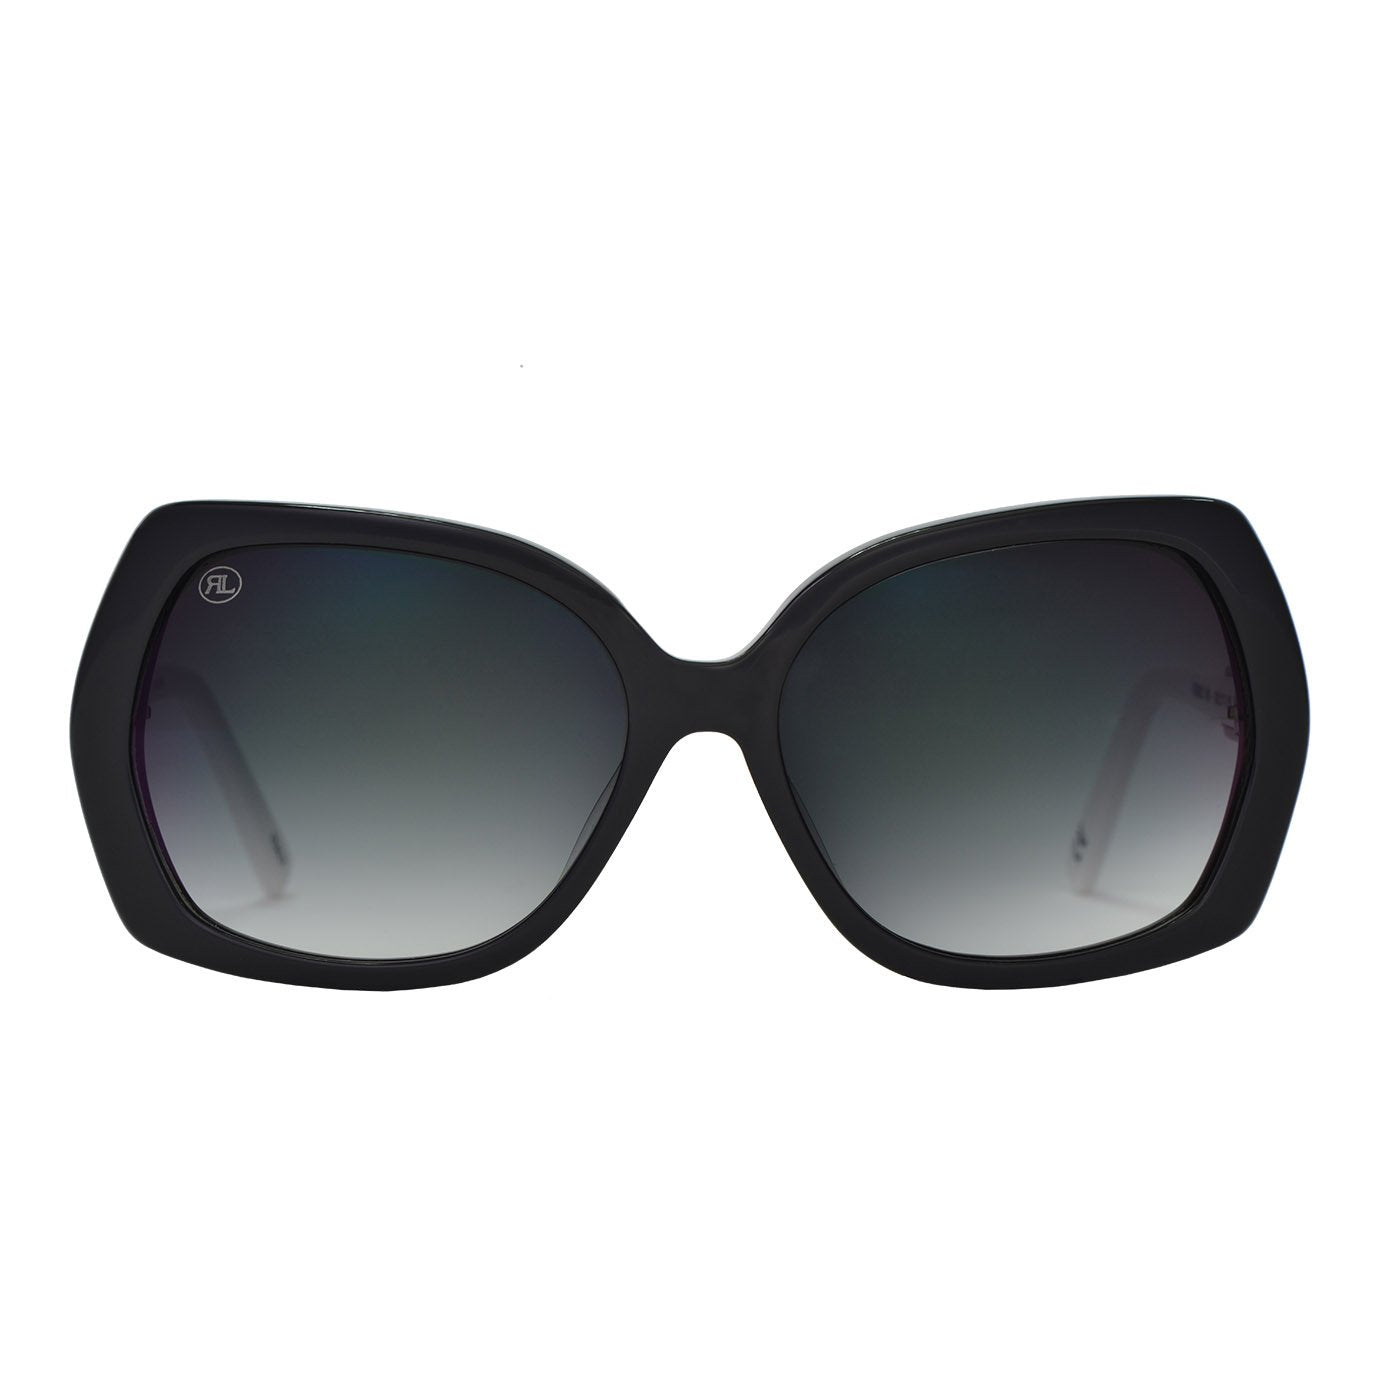 RENATO LANDINI Women's Sunglasses Black & White/ Angel Eye